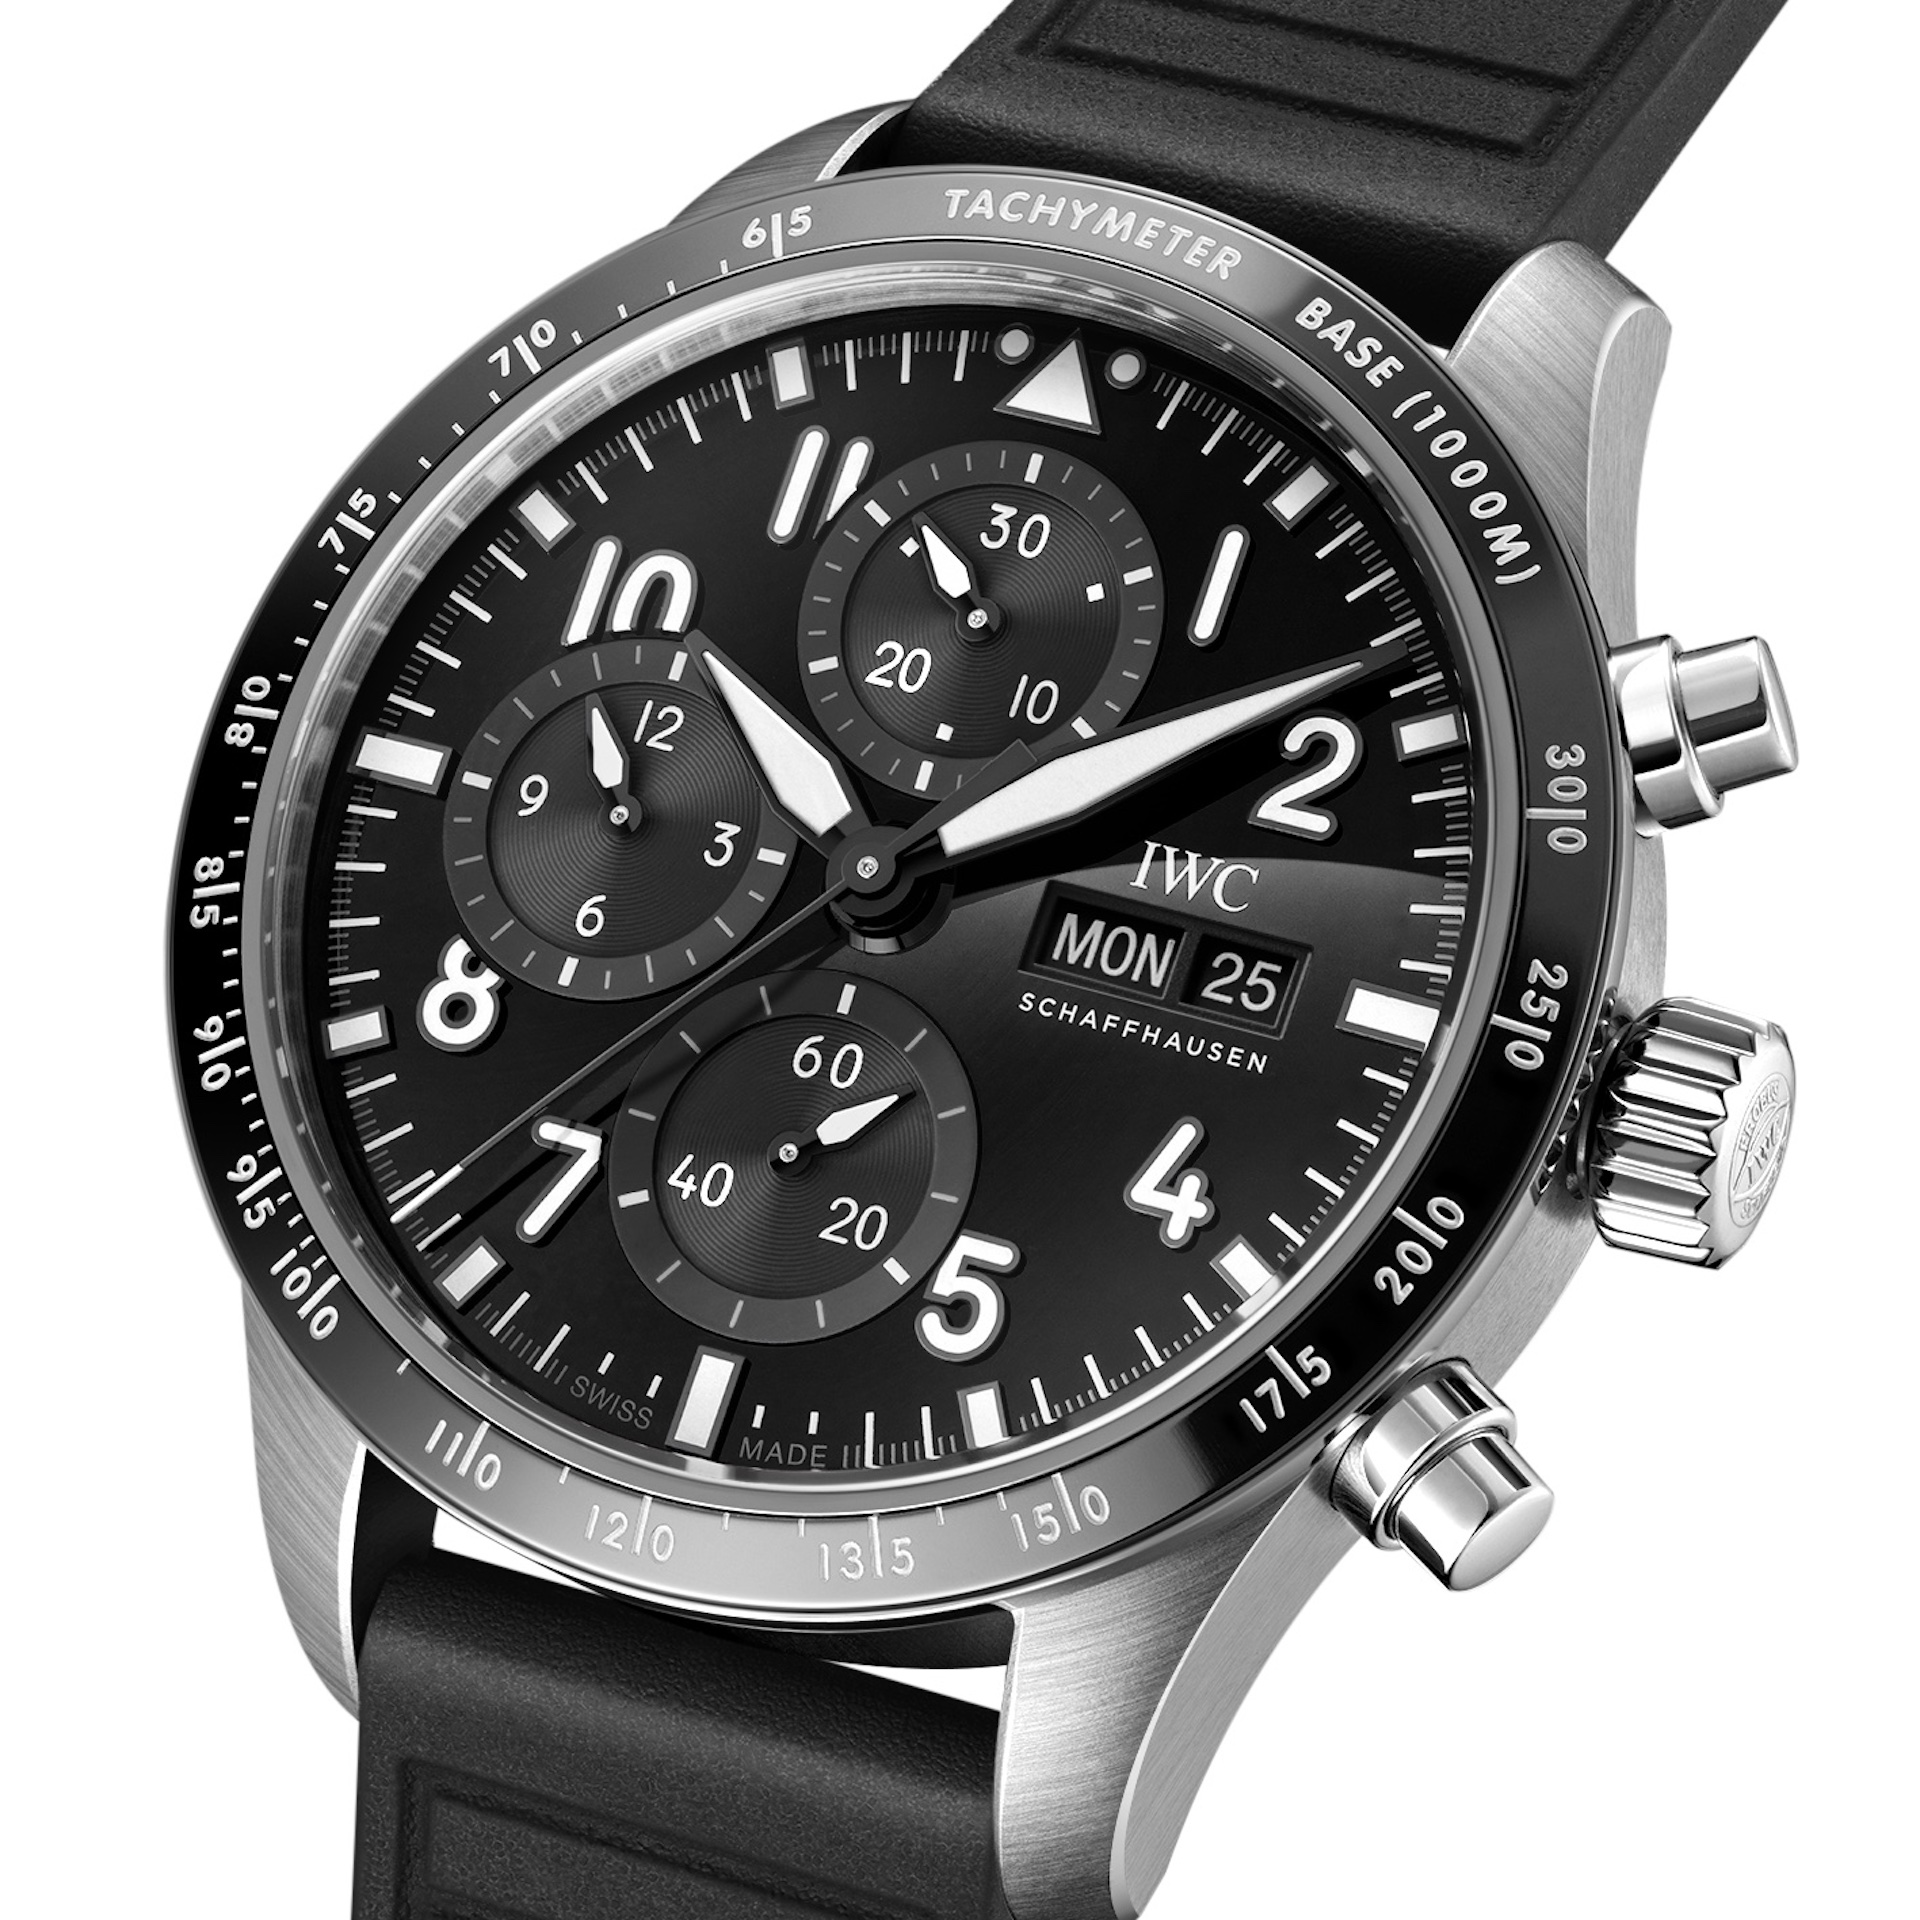 IWC Pilot's Watch Performance Chronograph AMG